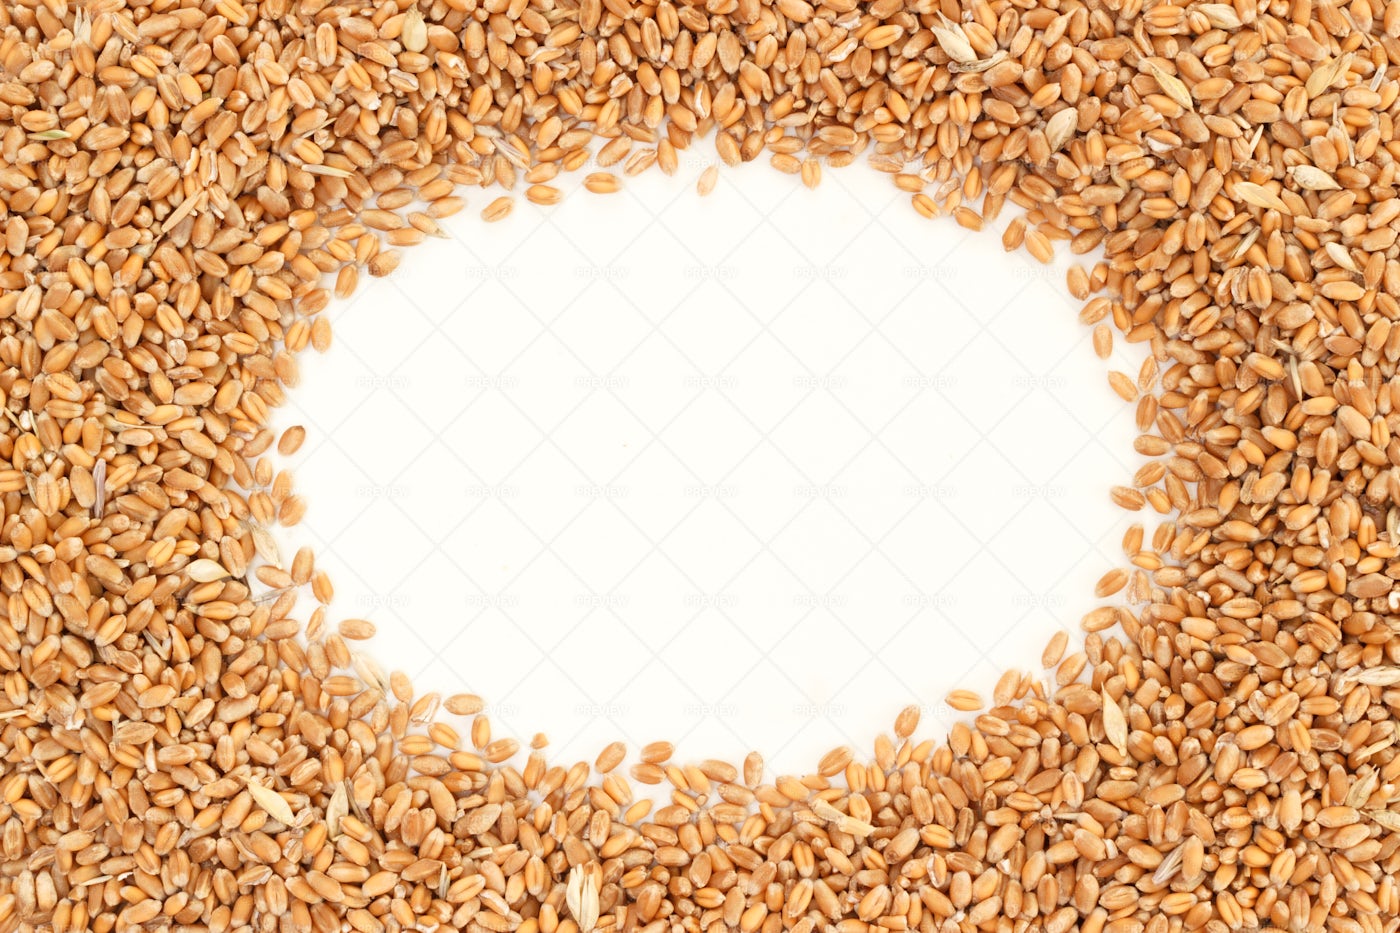 Wheat Seed Frame: Stock Photos